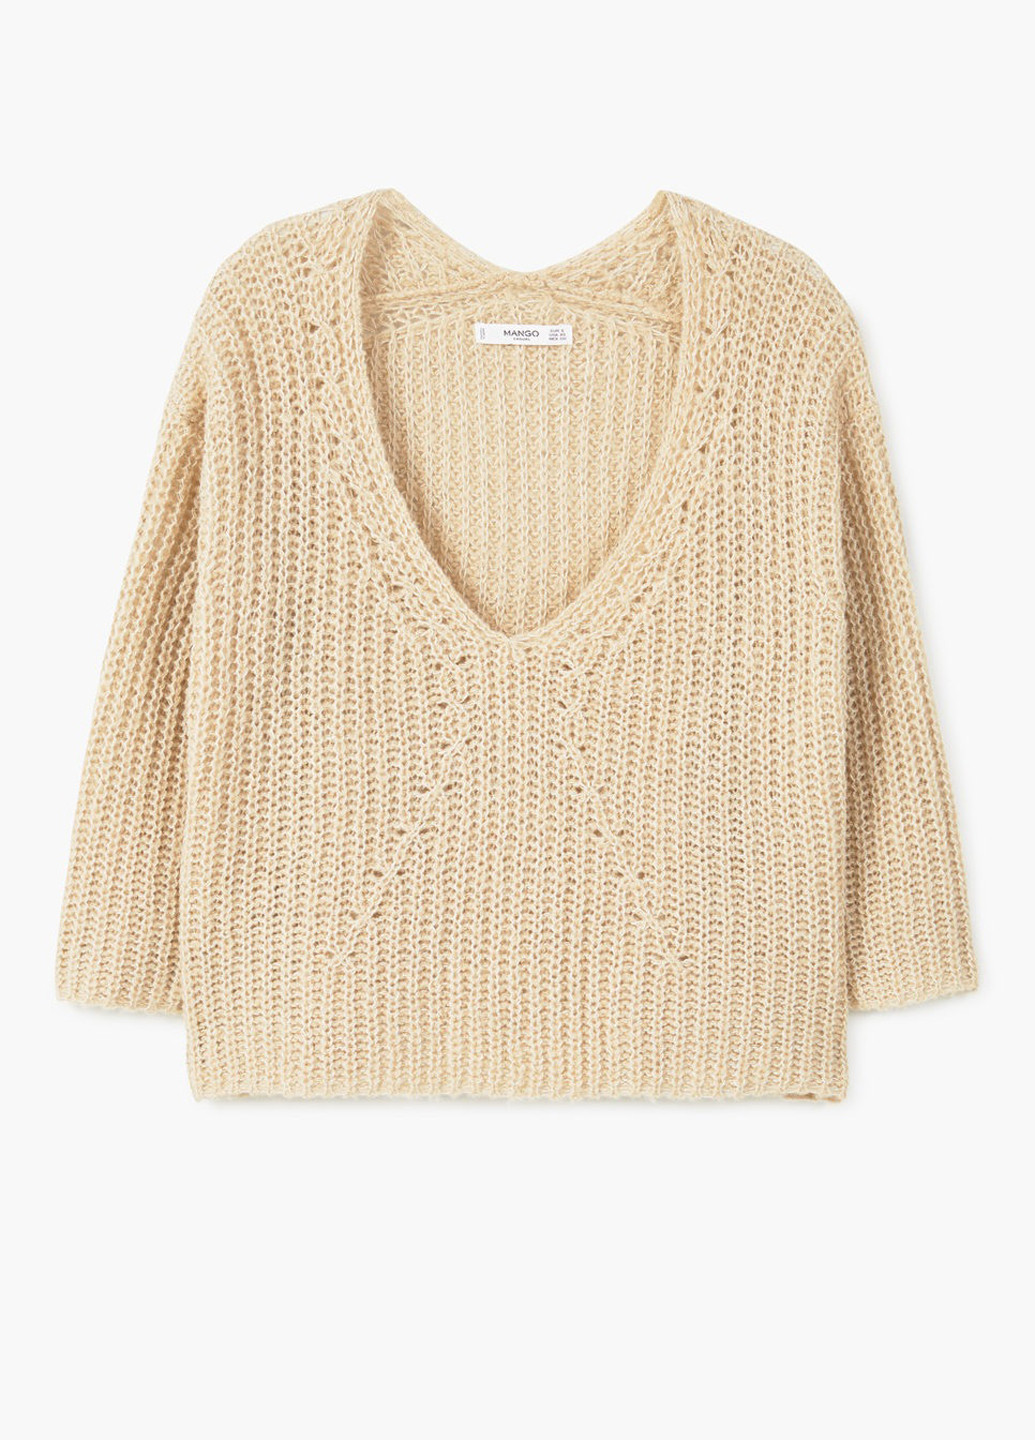 Бежевый демисезонный пуловер пуловер Mango